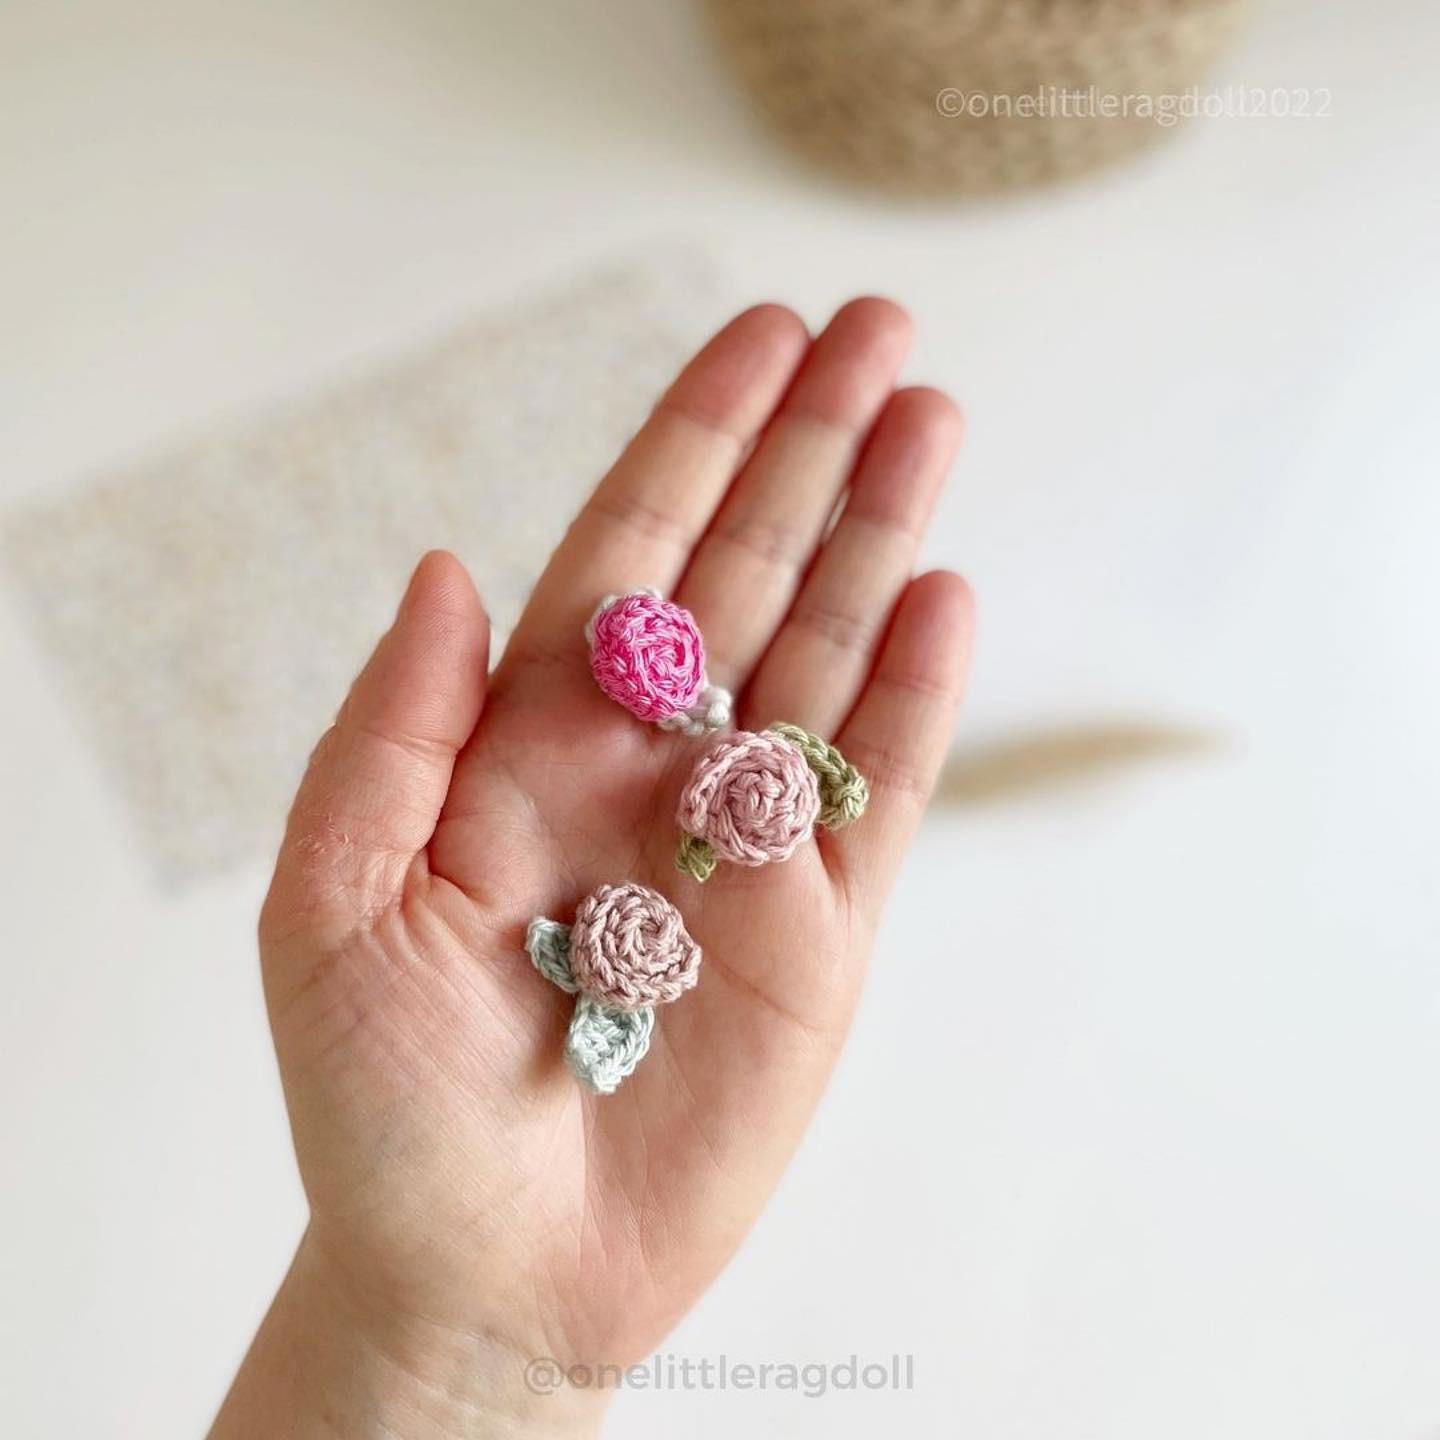 Small decorative flower crochet pattern.